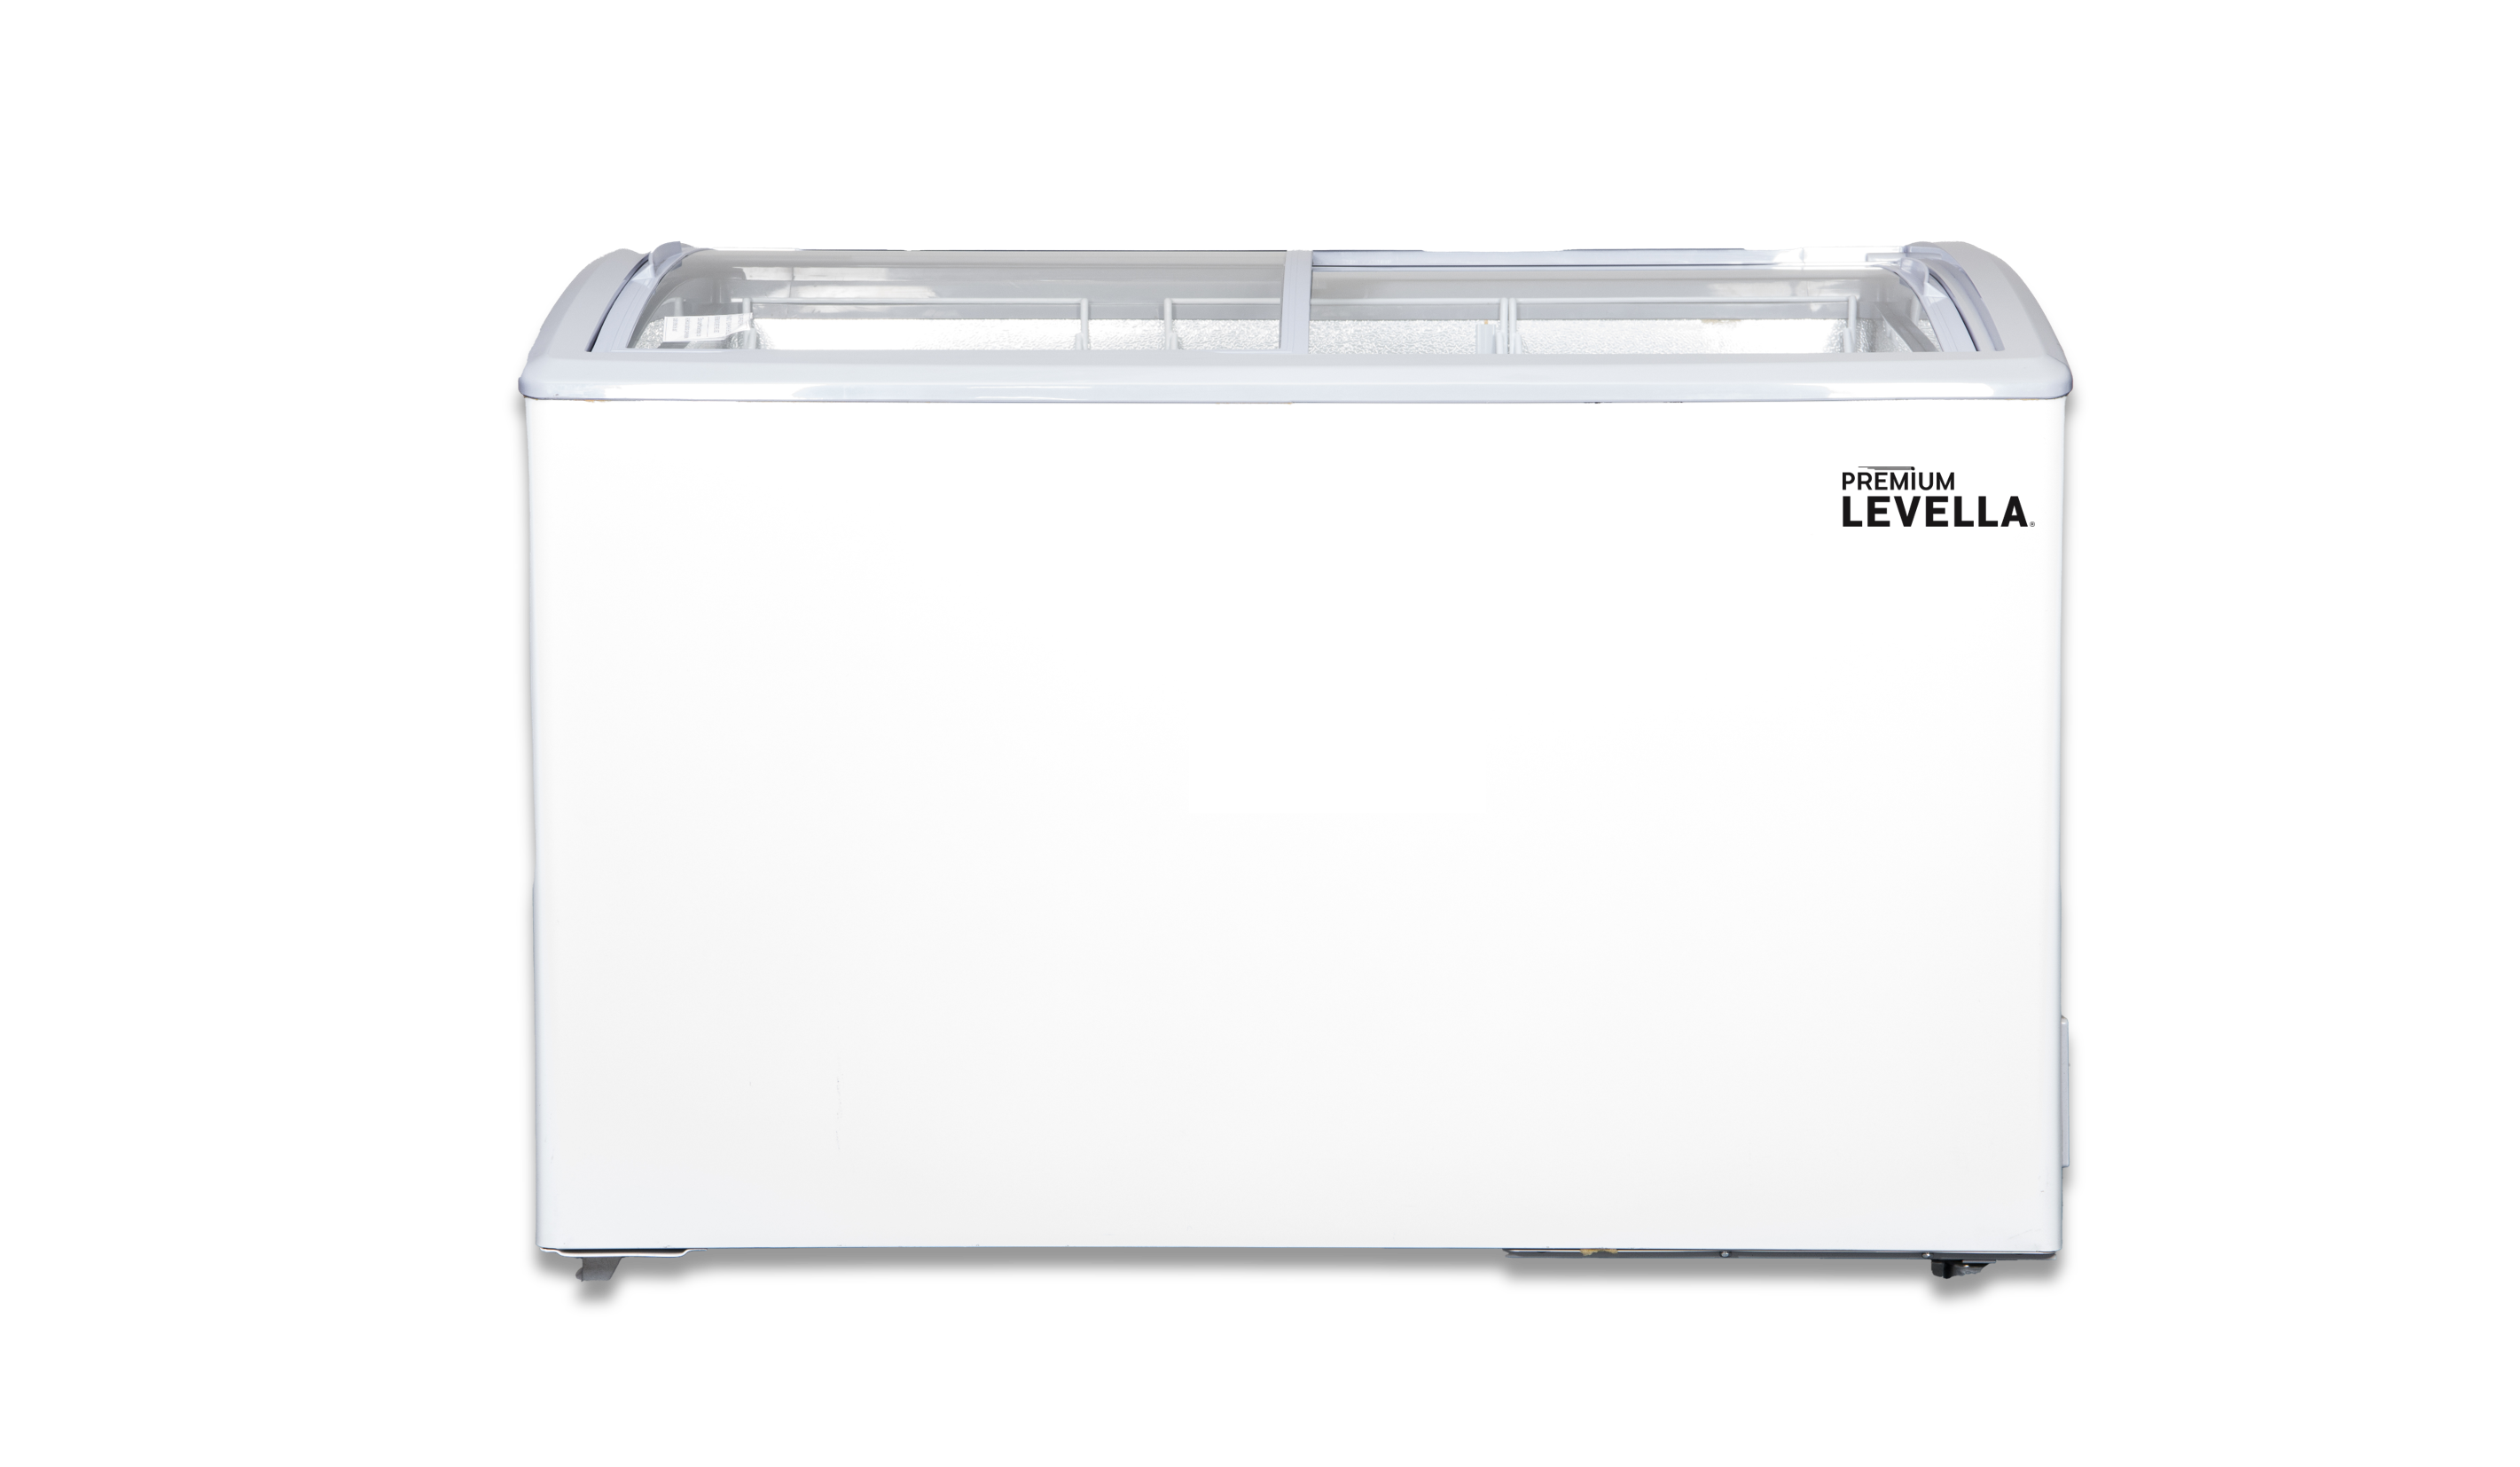 Premium Levella PFV1406XS 14.0 CuFt Upright Freezer / BrandsMart USA